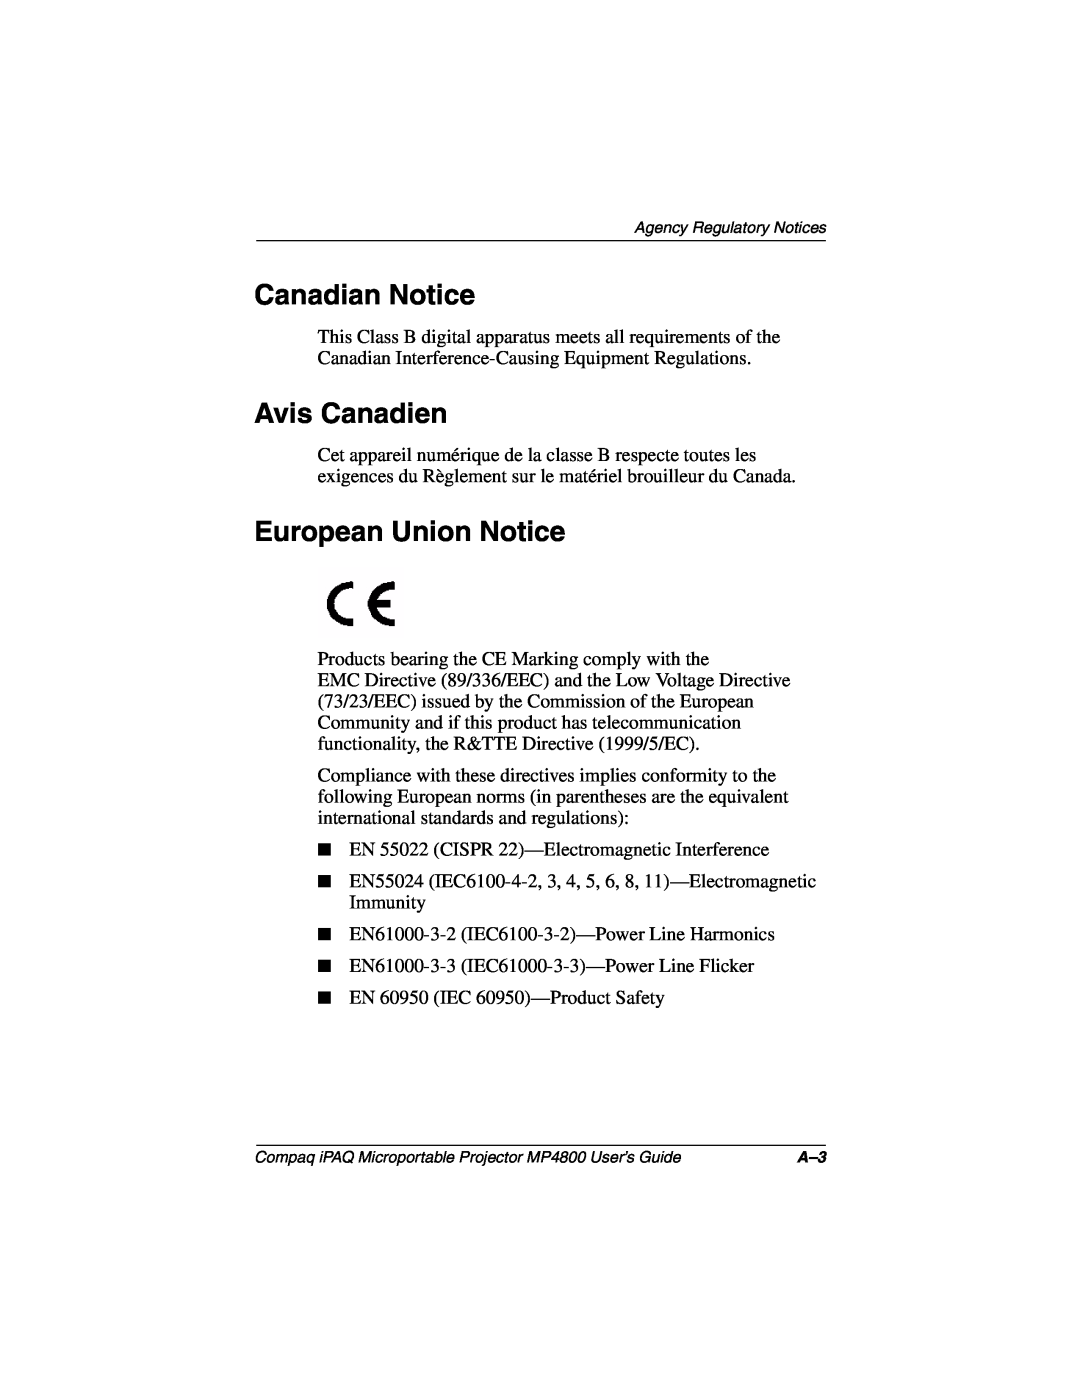 Compaq MP4800 manual Canadian Notice, Avis Canadien, European Union Notice 